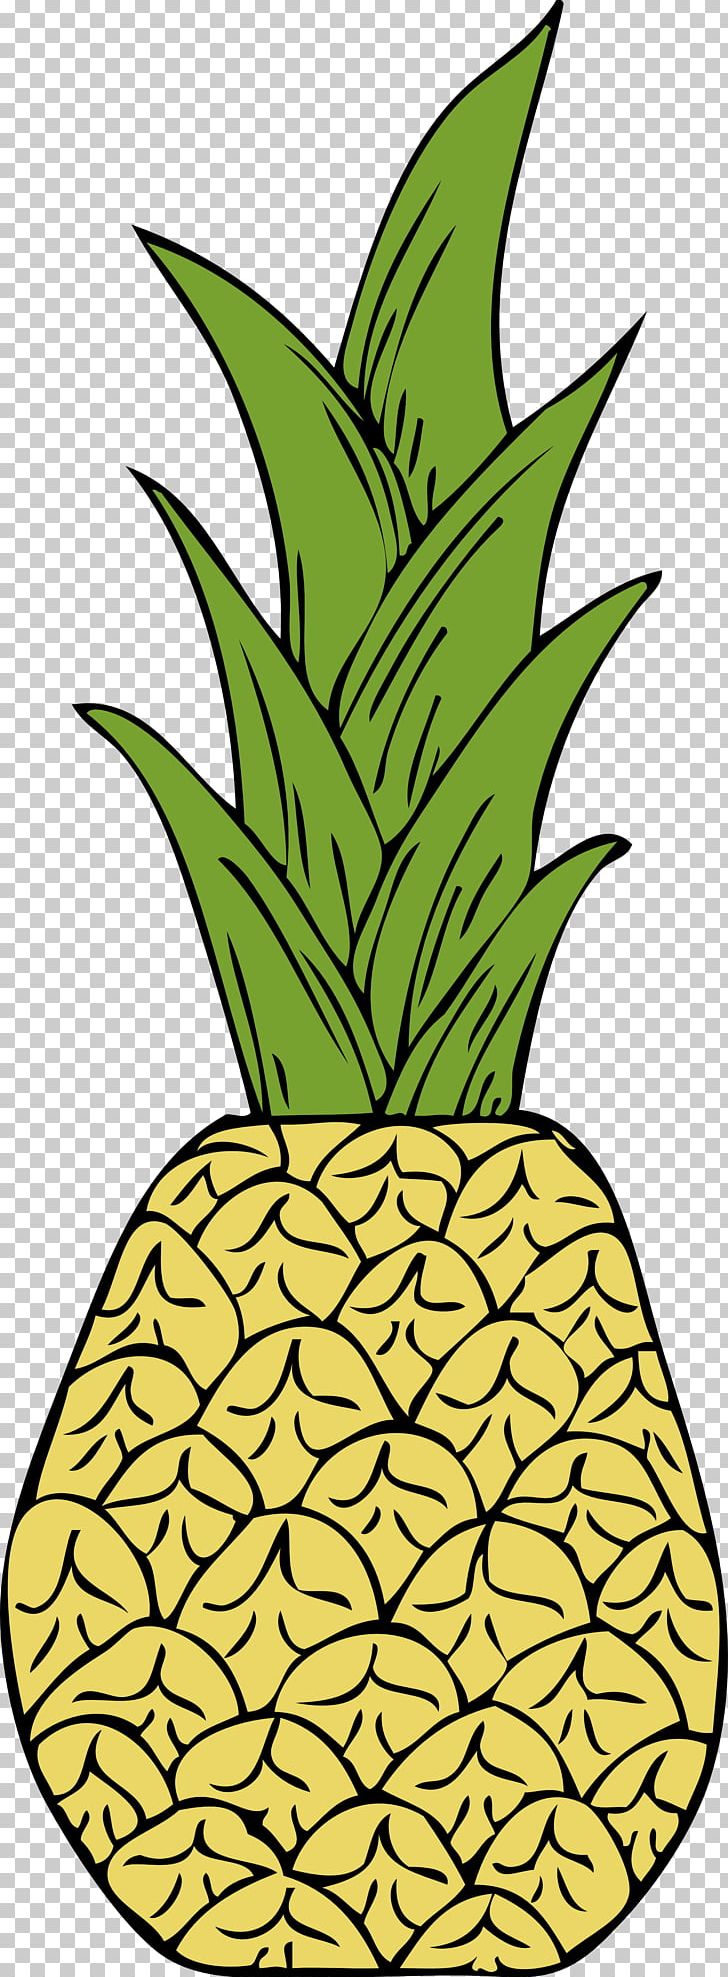 Pineapple Tart Pineapple Bun Pineapple Cake Fruit Salad PNG, Clipart, Ananas, Artwork, Drawing, Flowering Plant, Food Free PNG Download